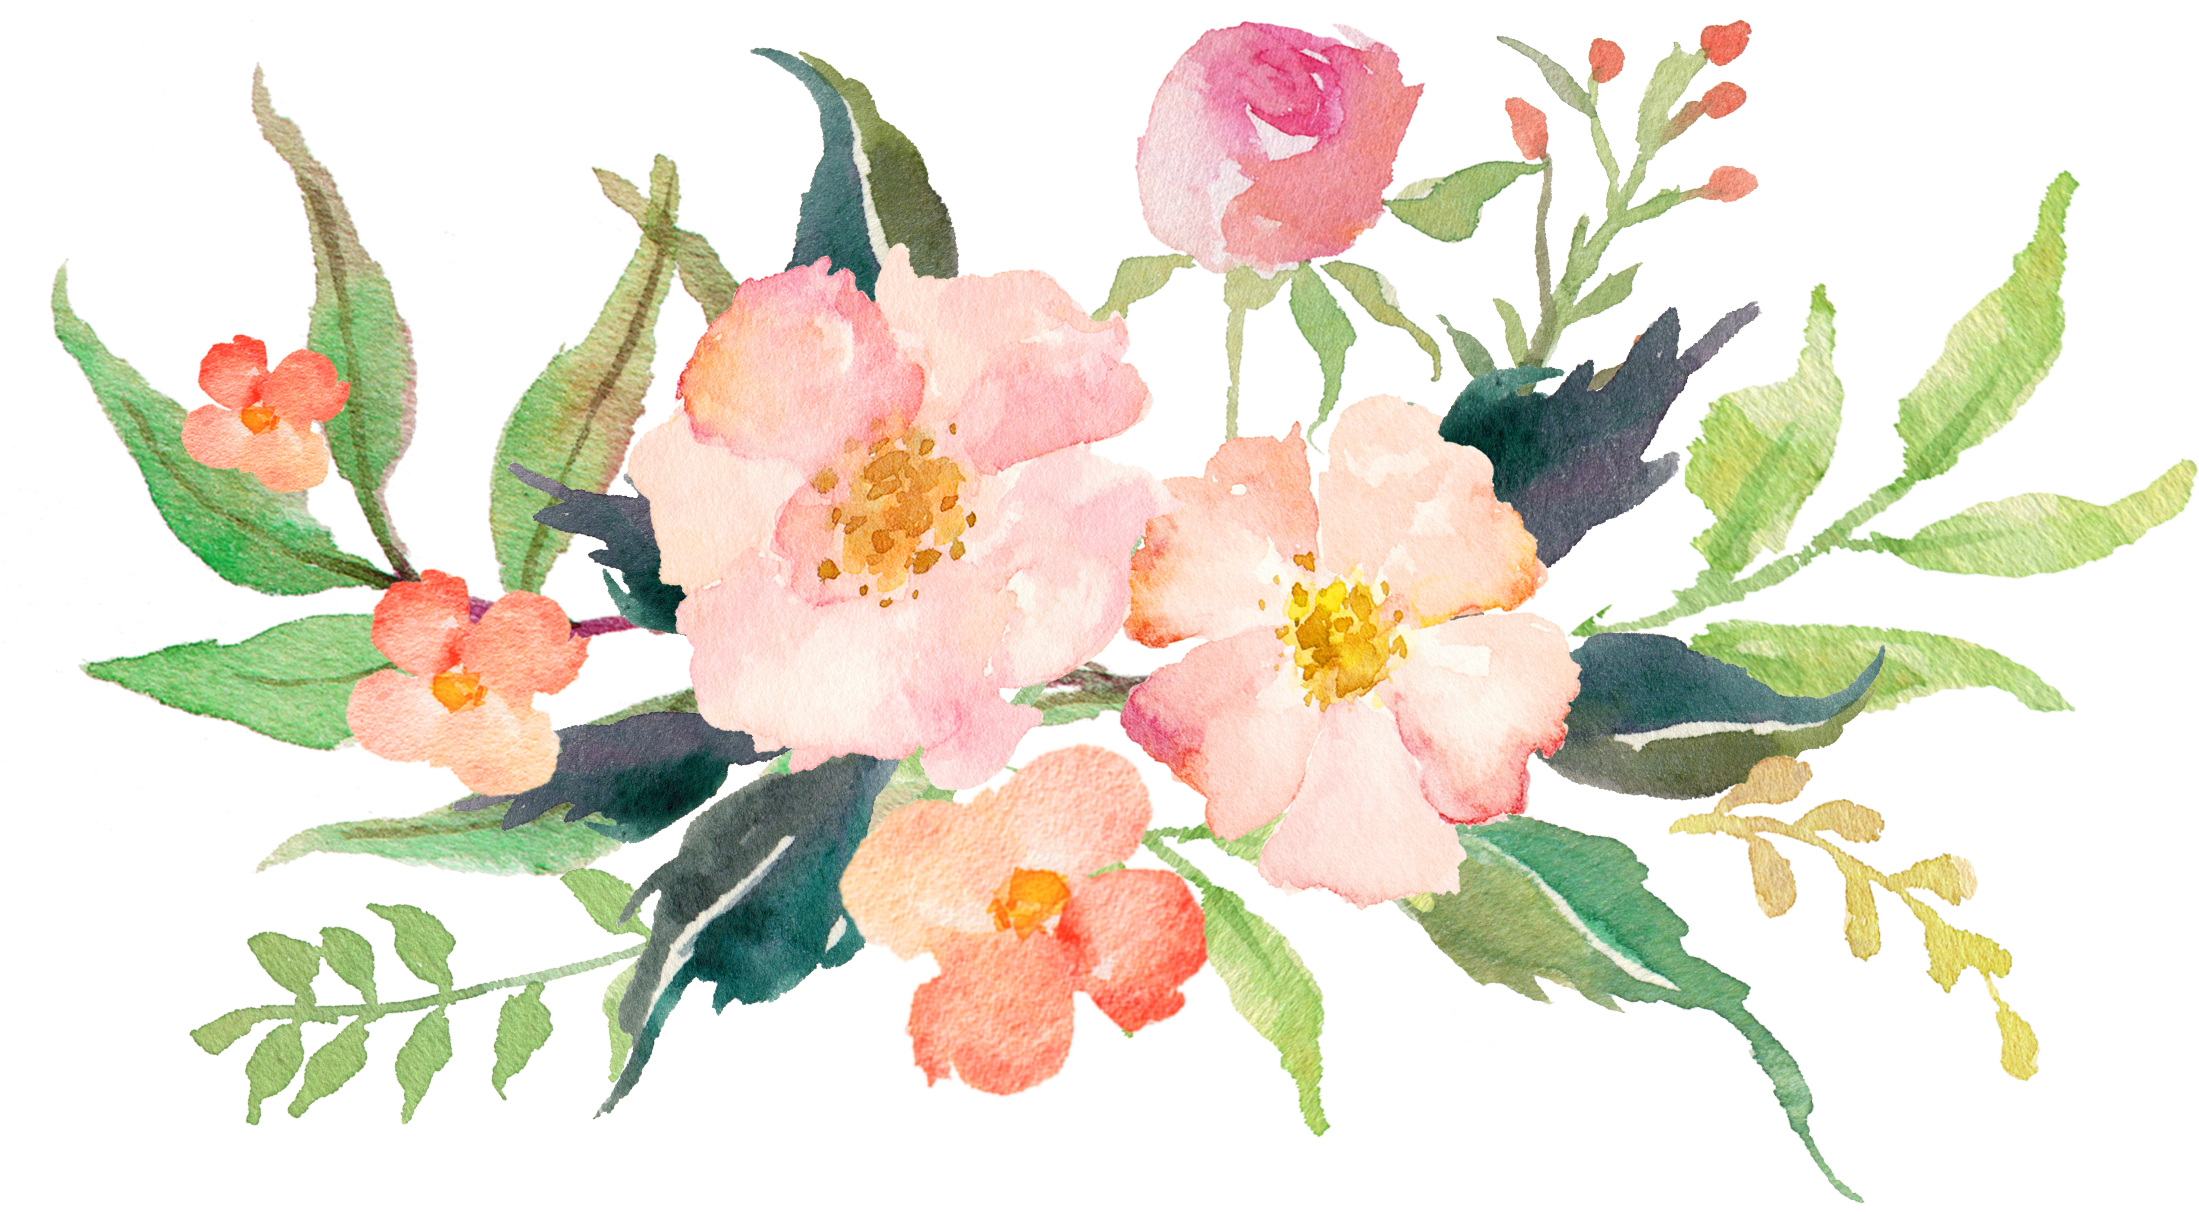 Imagen Transparente de la flor de acuarela